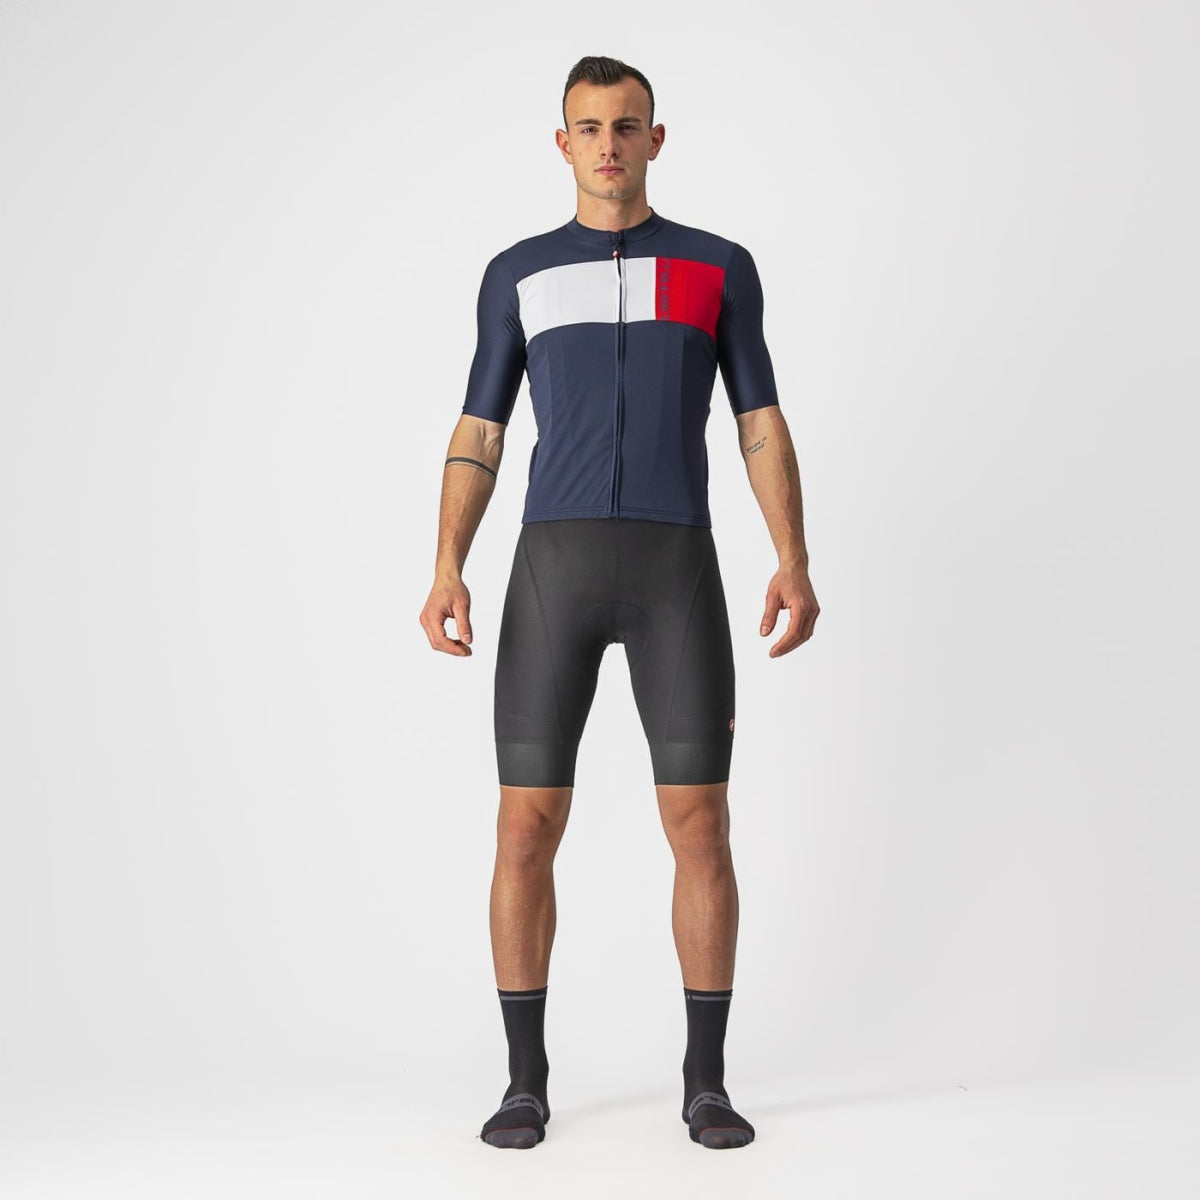 Castelli Prologo 7 Mens Cycling Jersey (Savile Blue/Silver Gray/Red)